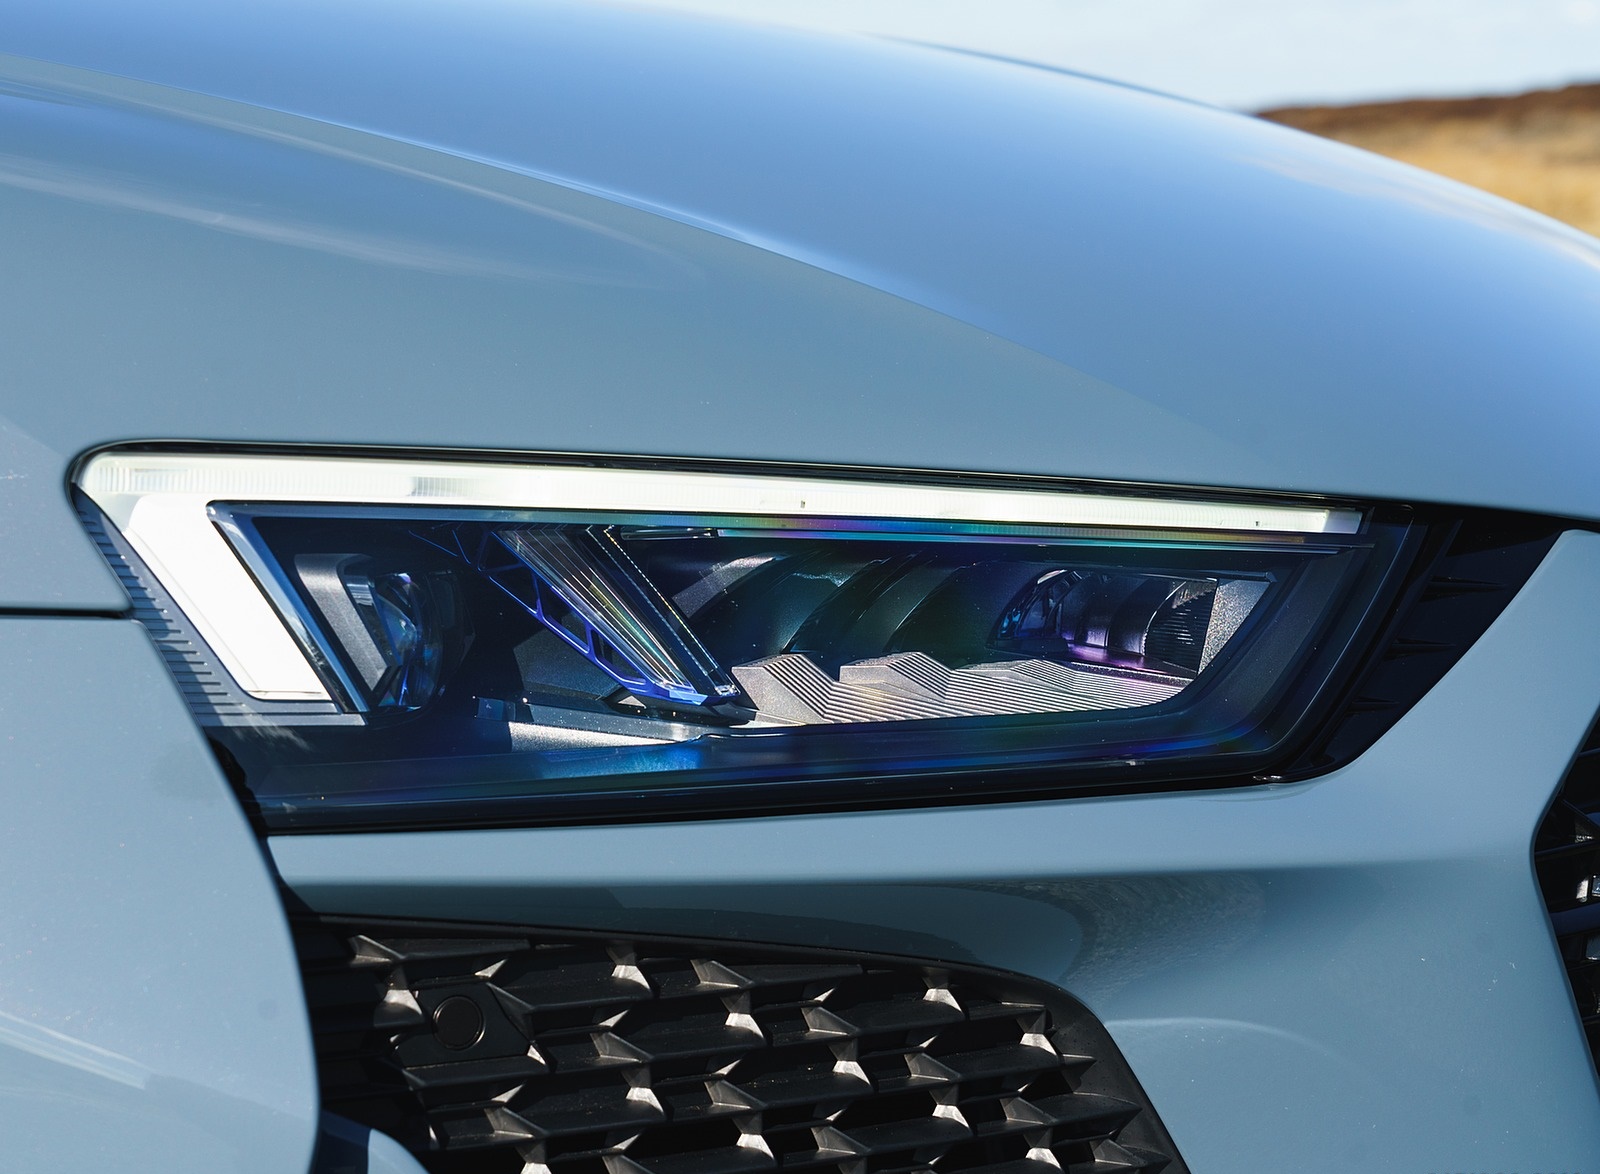 2019 Audi R8 V10 Coupe Performance quattro (UK-Spec) Headlight Wallpapers #150 of 199